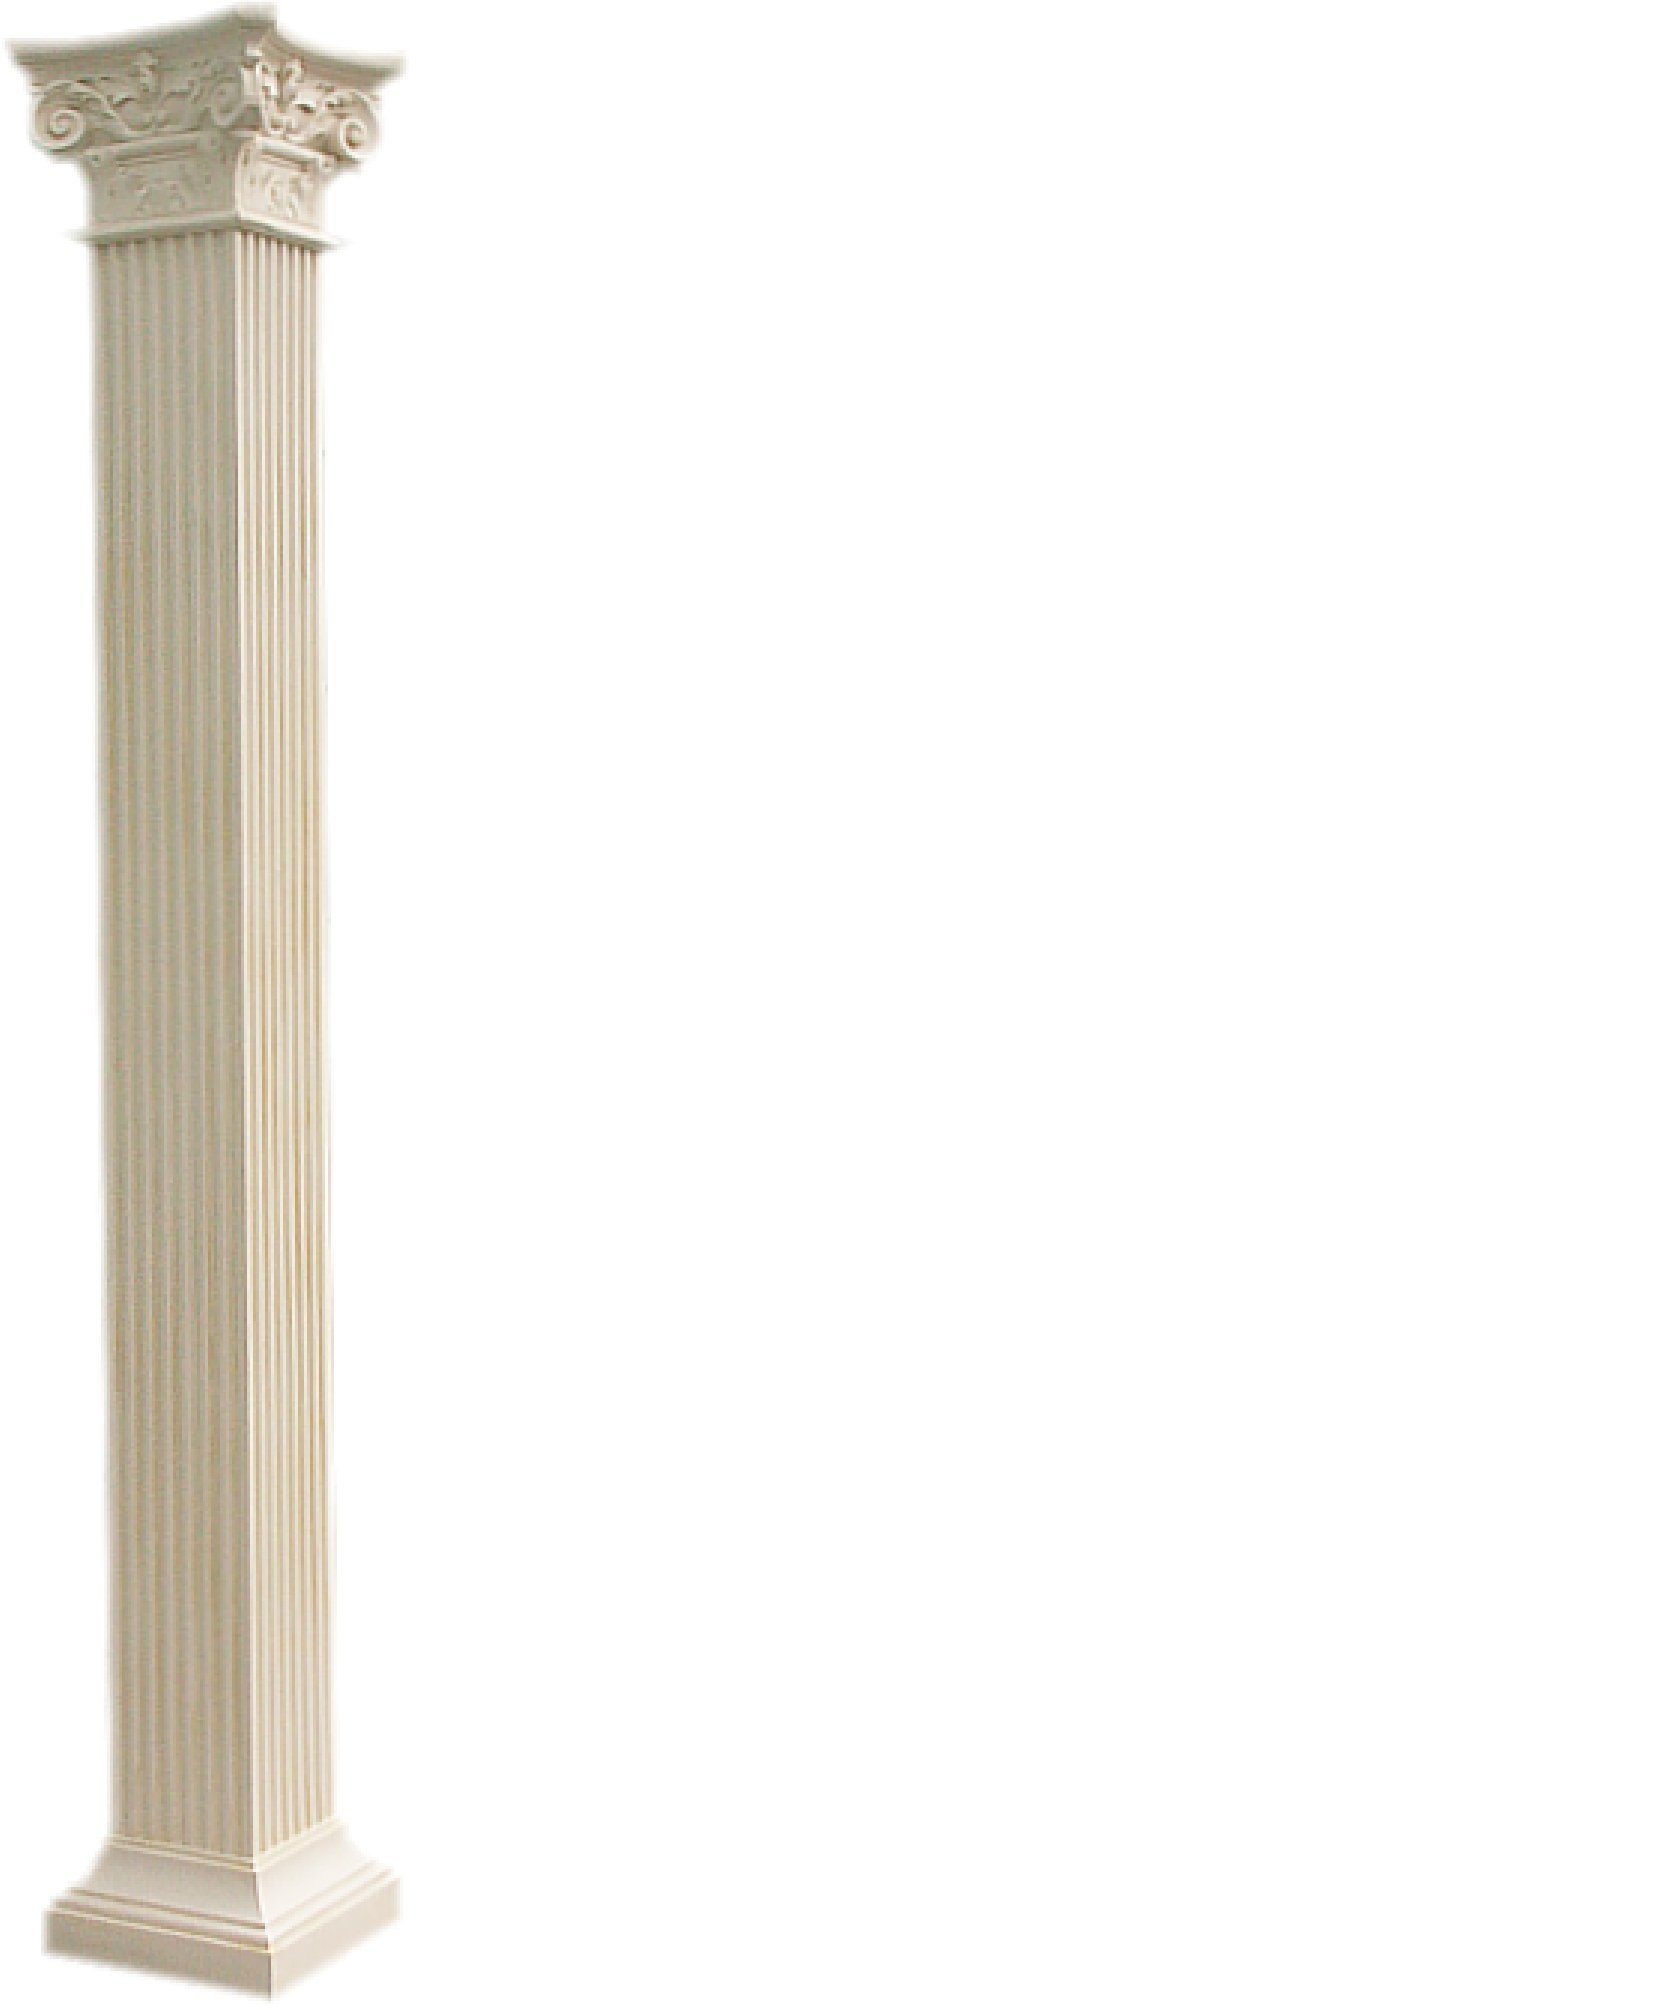 Griechische Antik Luxus Säulen Skulptur Säule JVmoebel Groß XXL 300cm Stil Neu Stützen